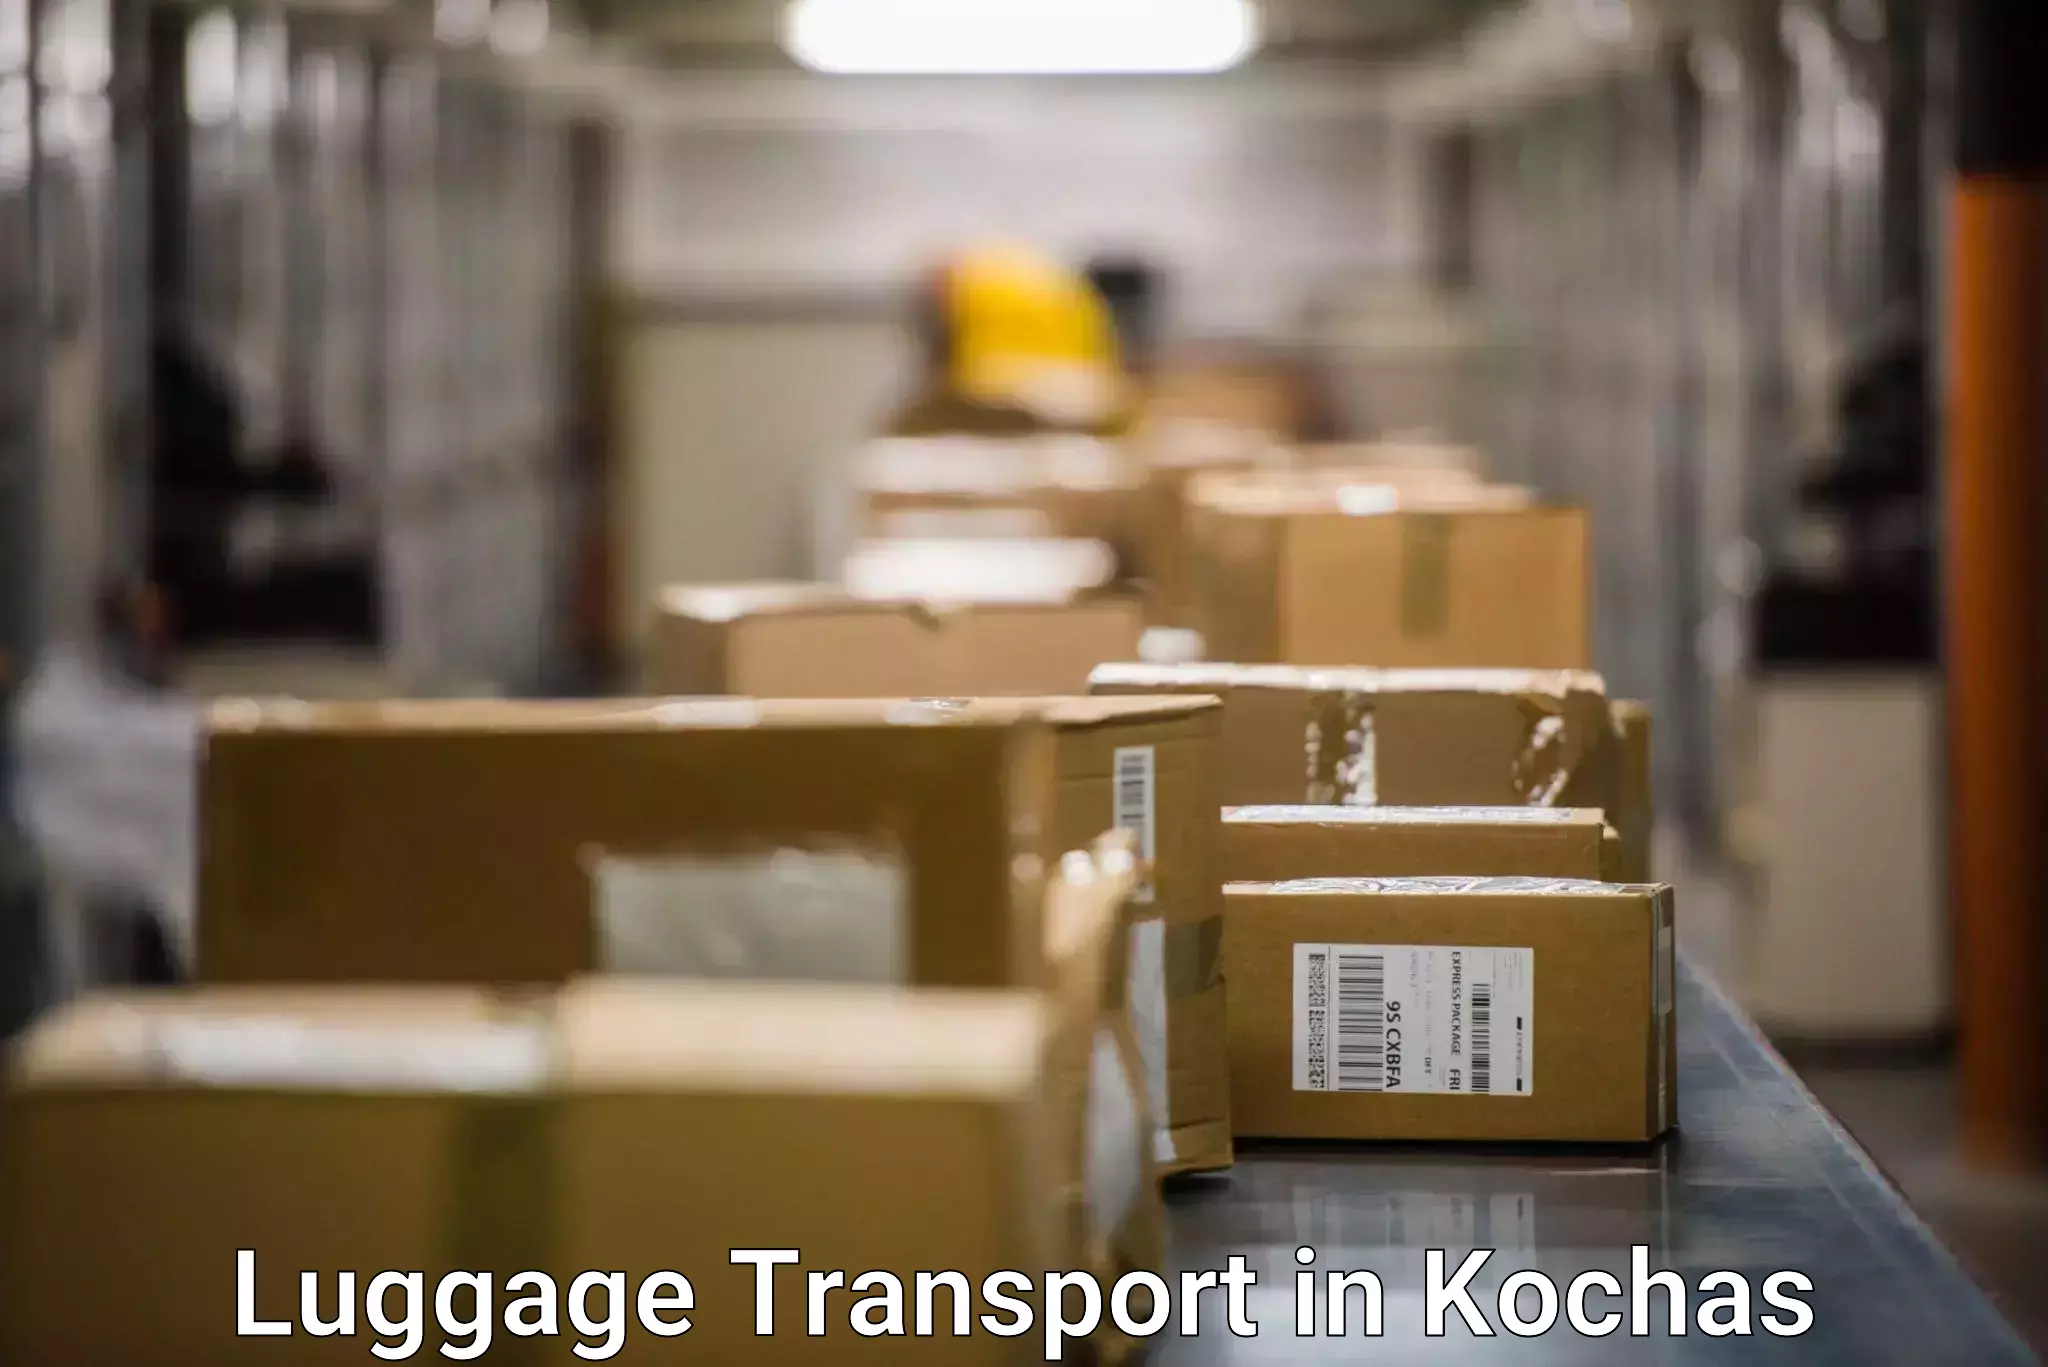 Luggage forwarding service in Kochas